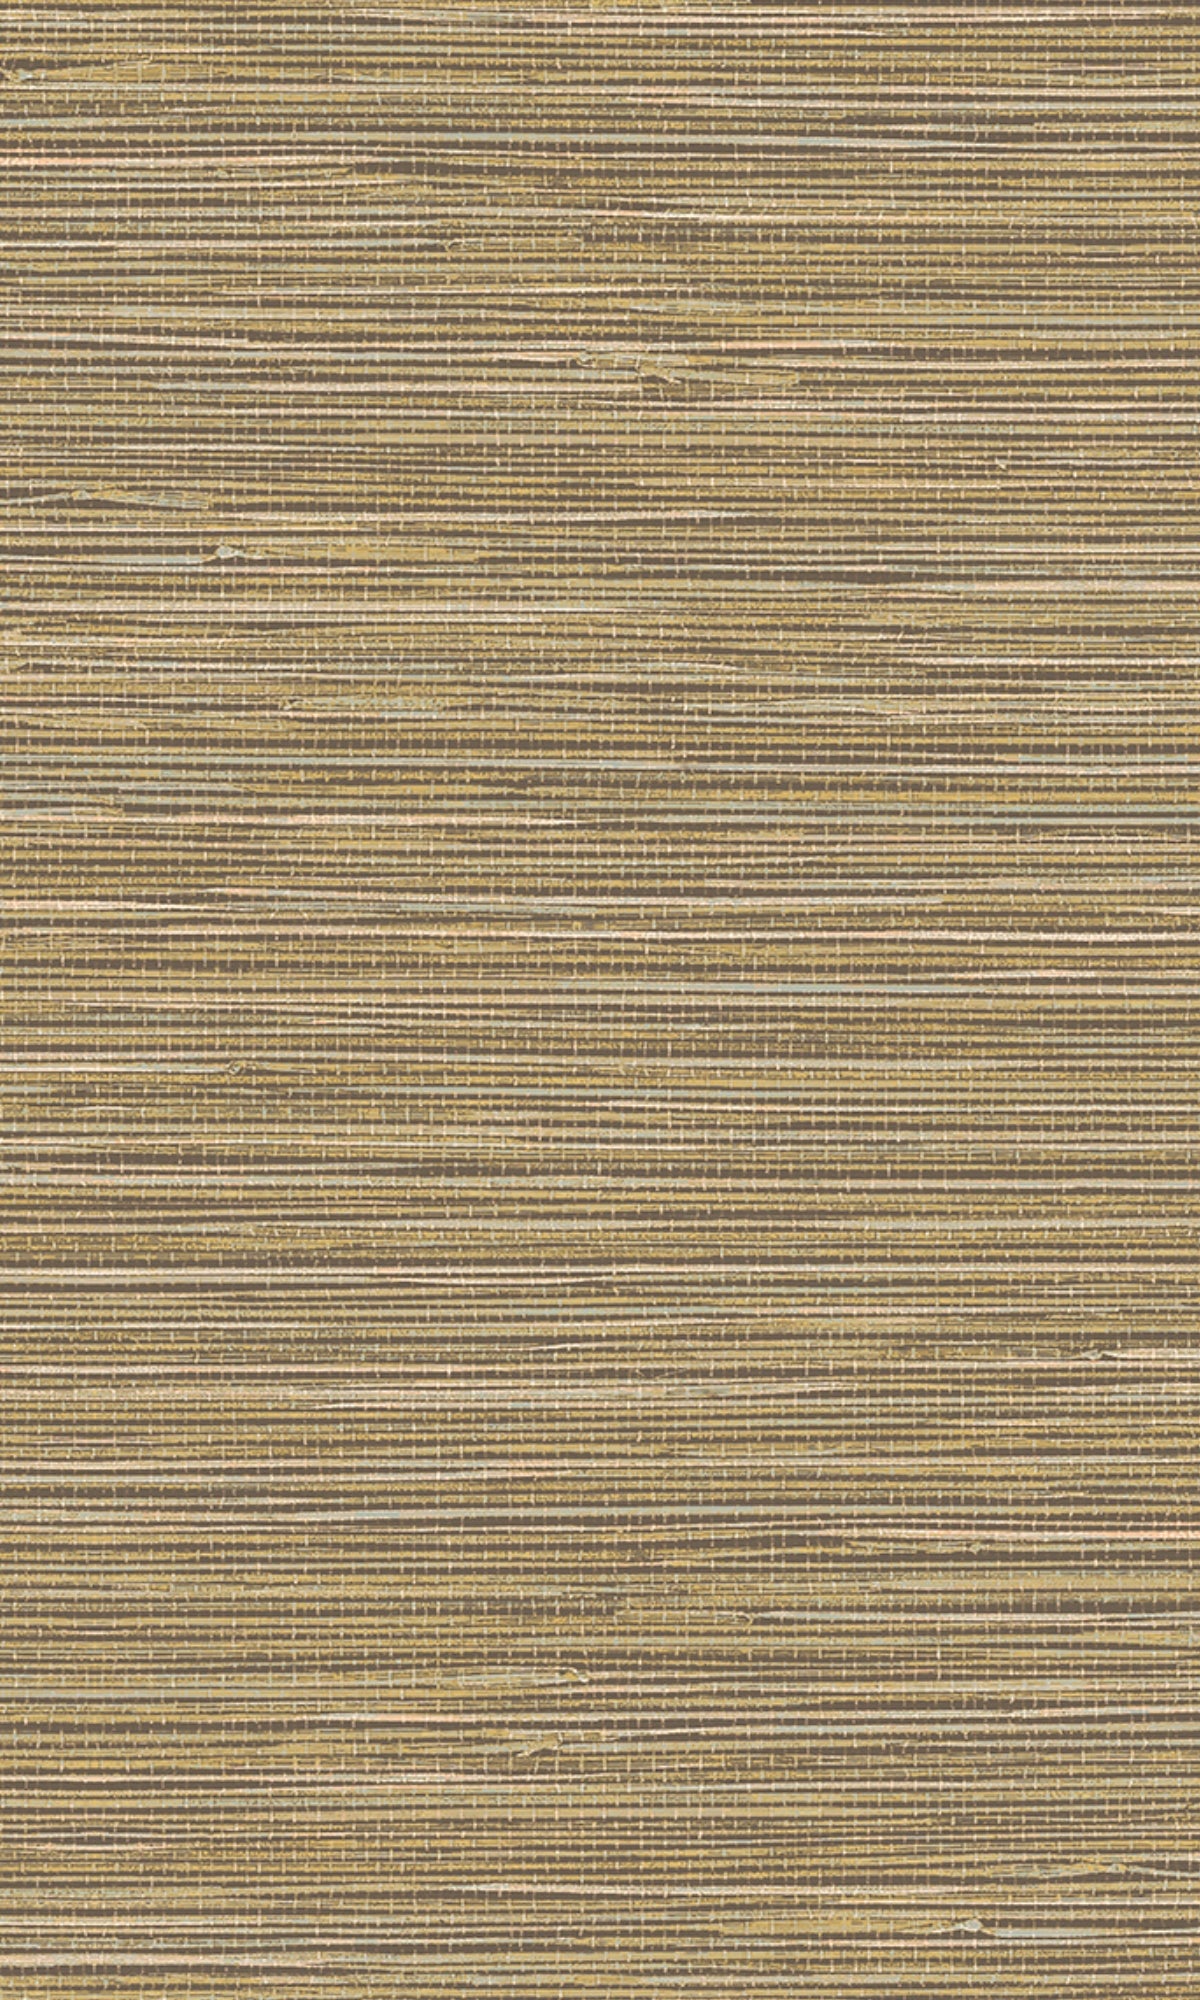 Greige Textured Grasscloth Wallpaper R8227